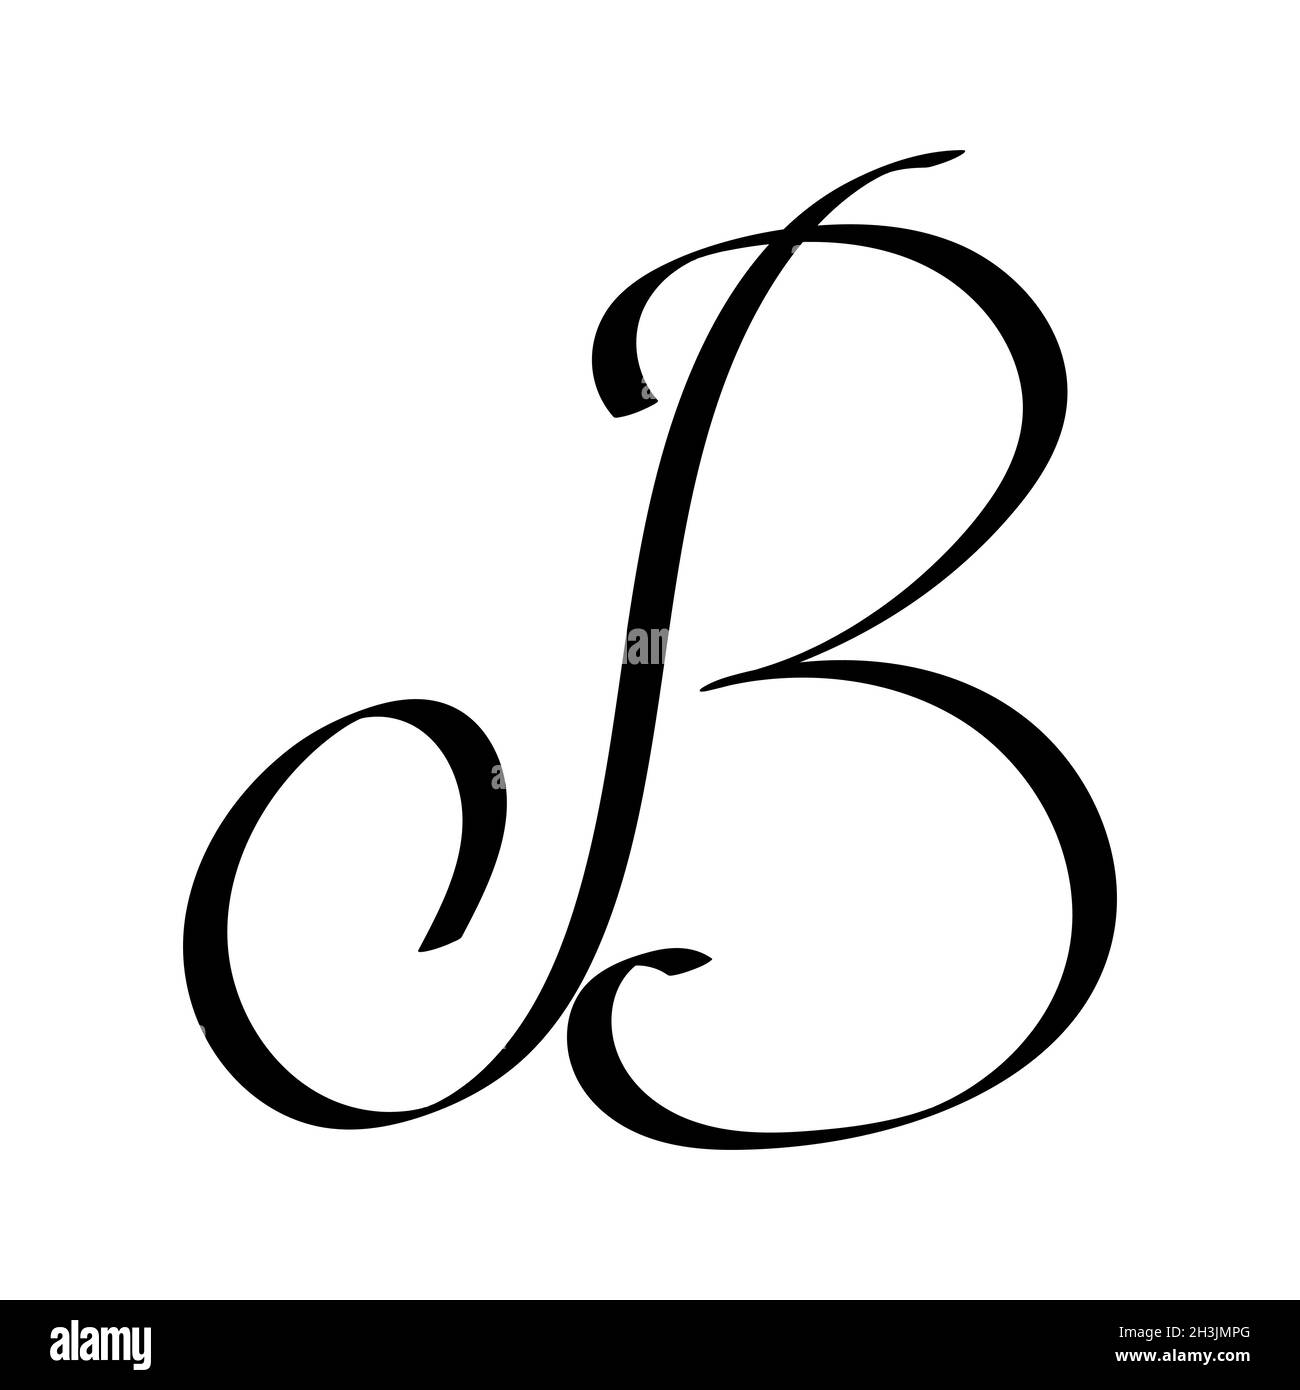 First capital letter B logo, calligraphy design stock illustration Stock Vector